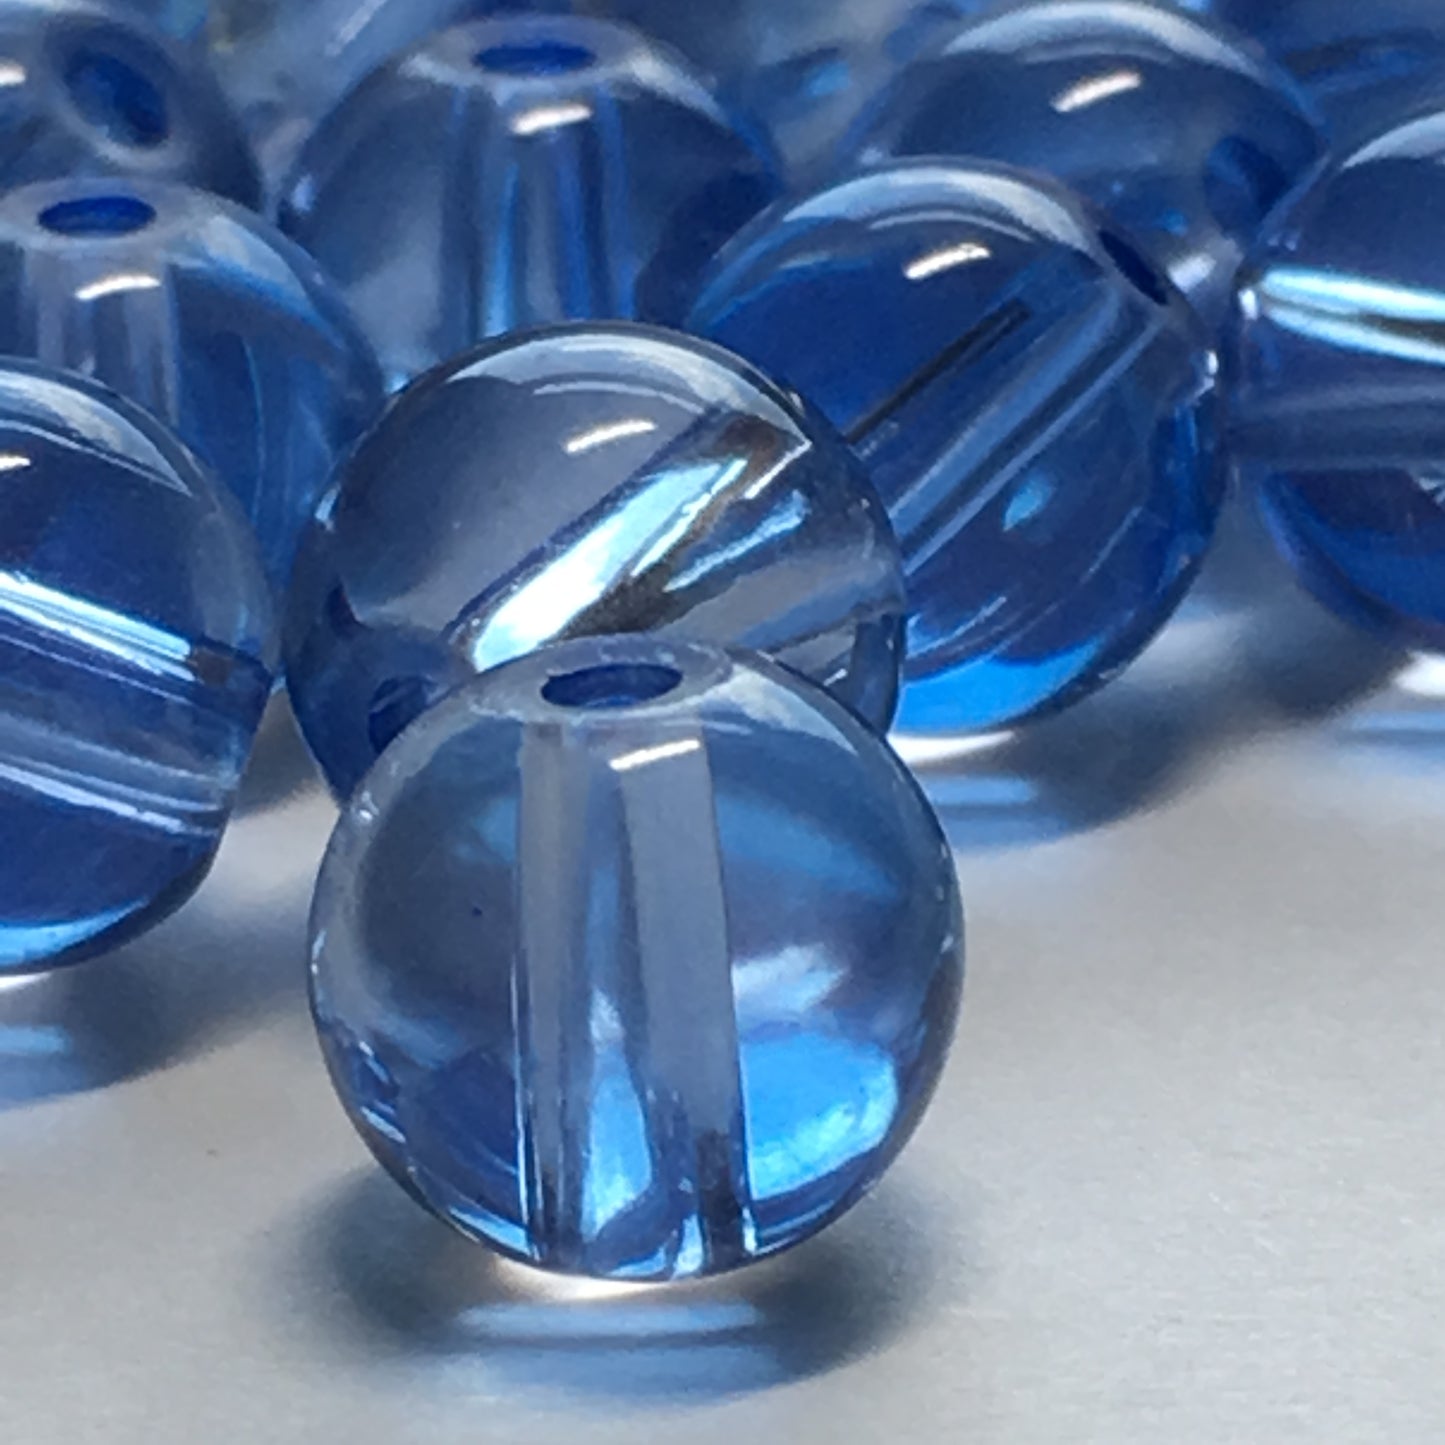 Transparent Blue Glass Round Beads, 8 mm - 32 Beads